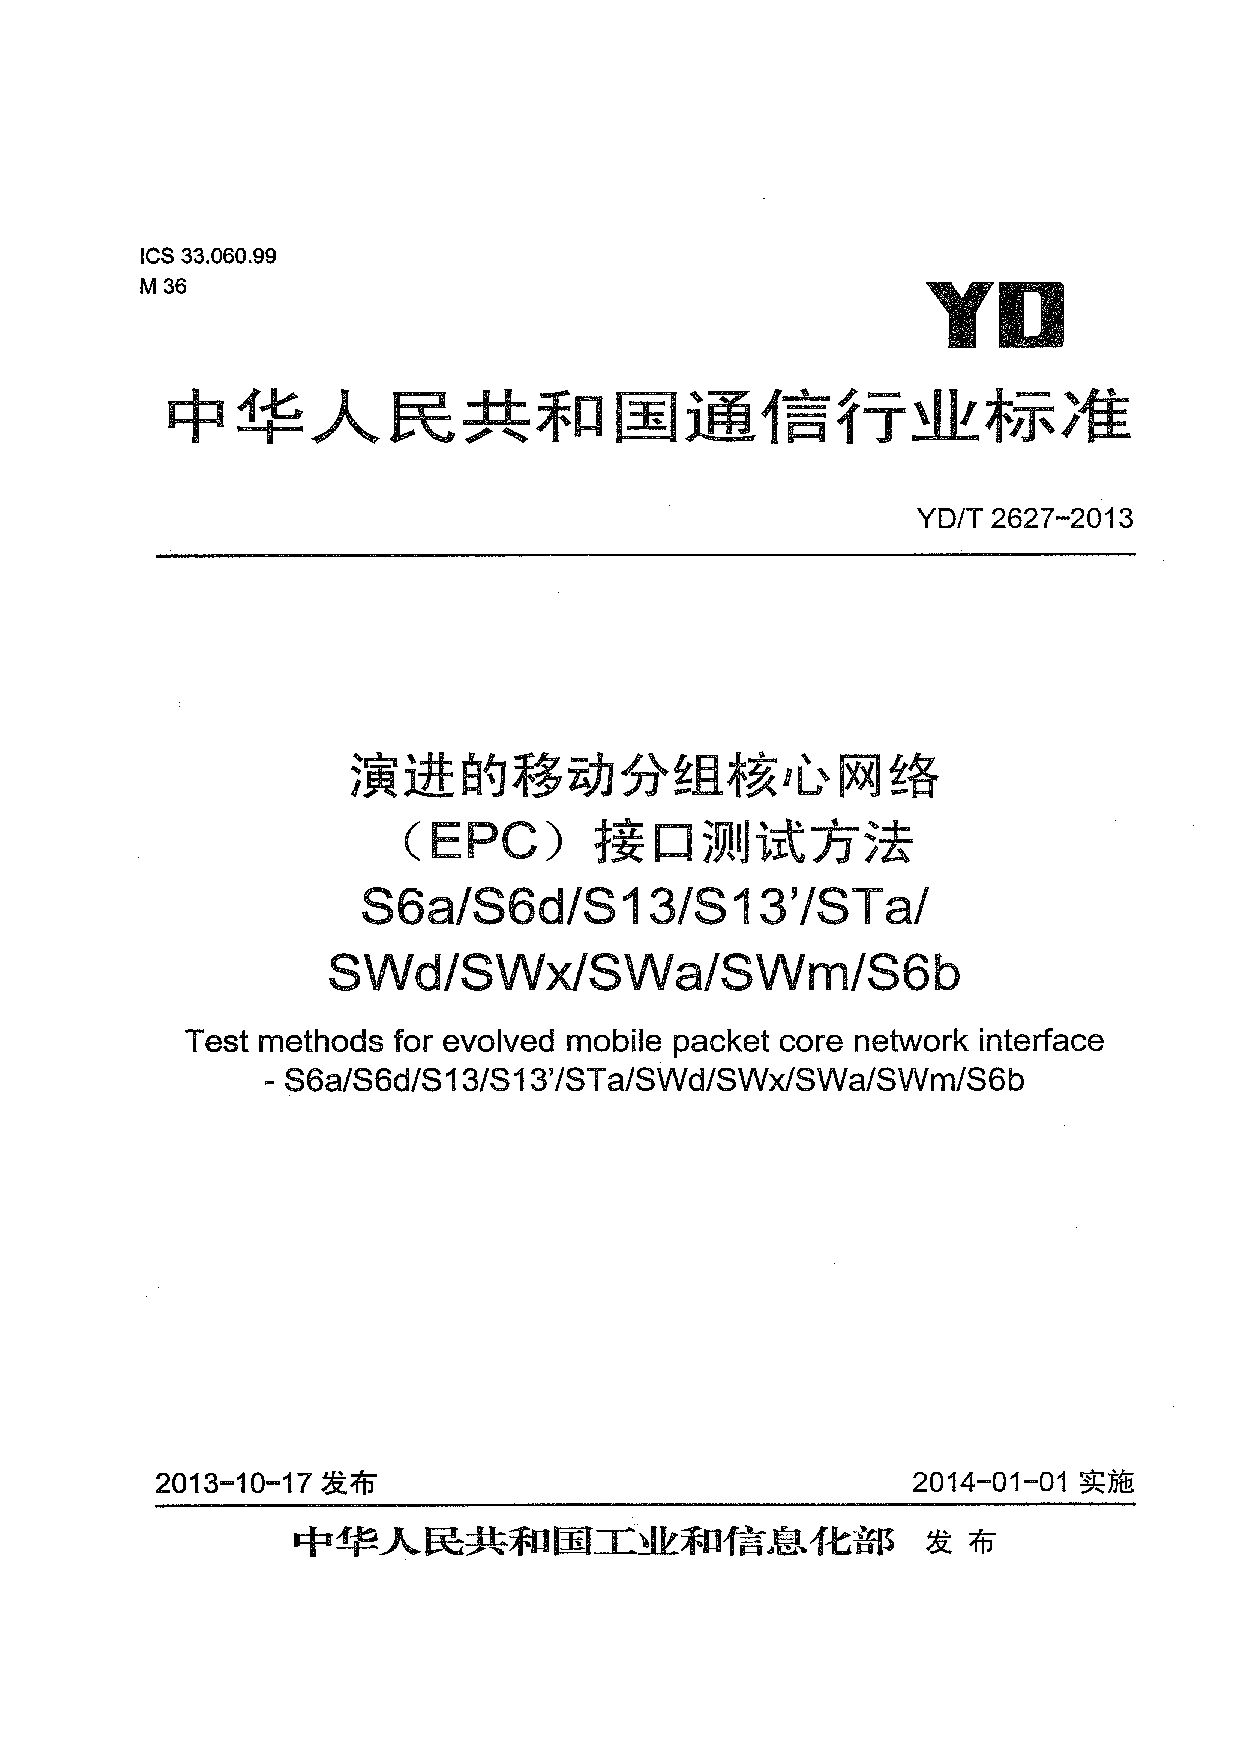 YD/T 2627-2013封面图